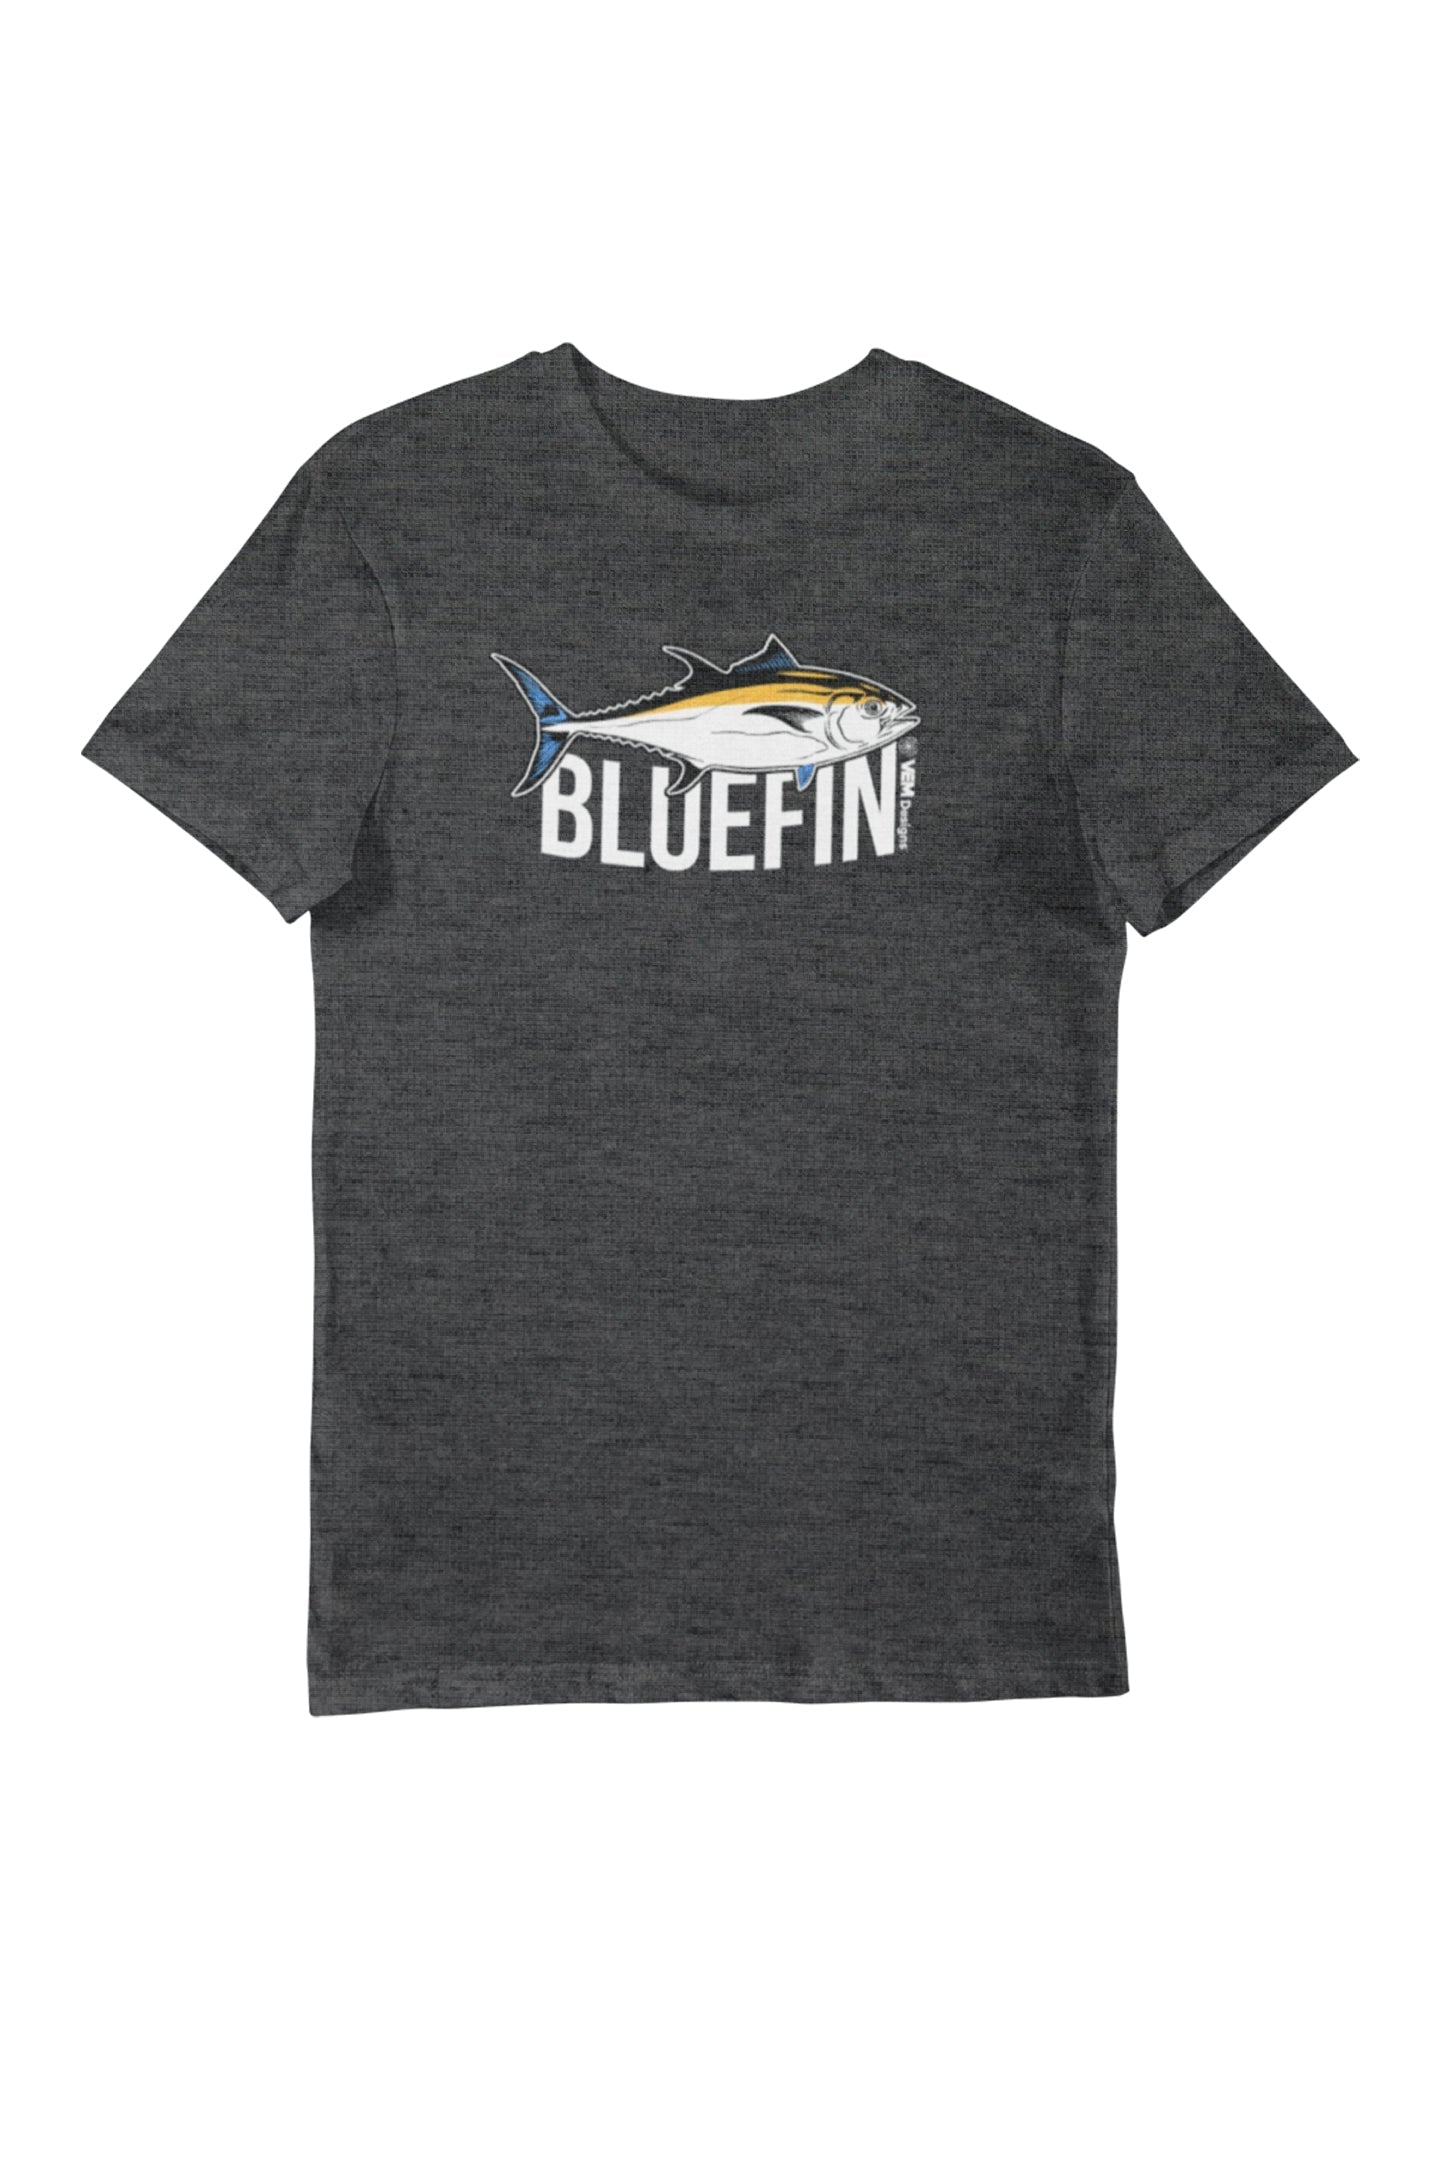 Bluefin - Women's